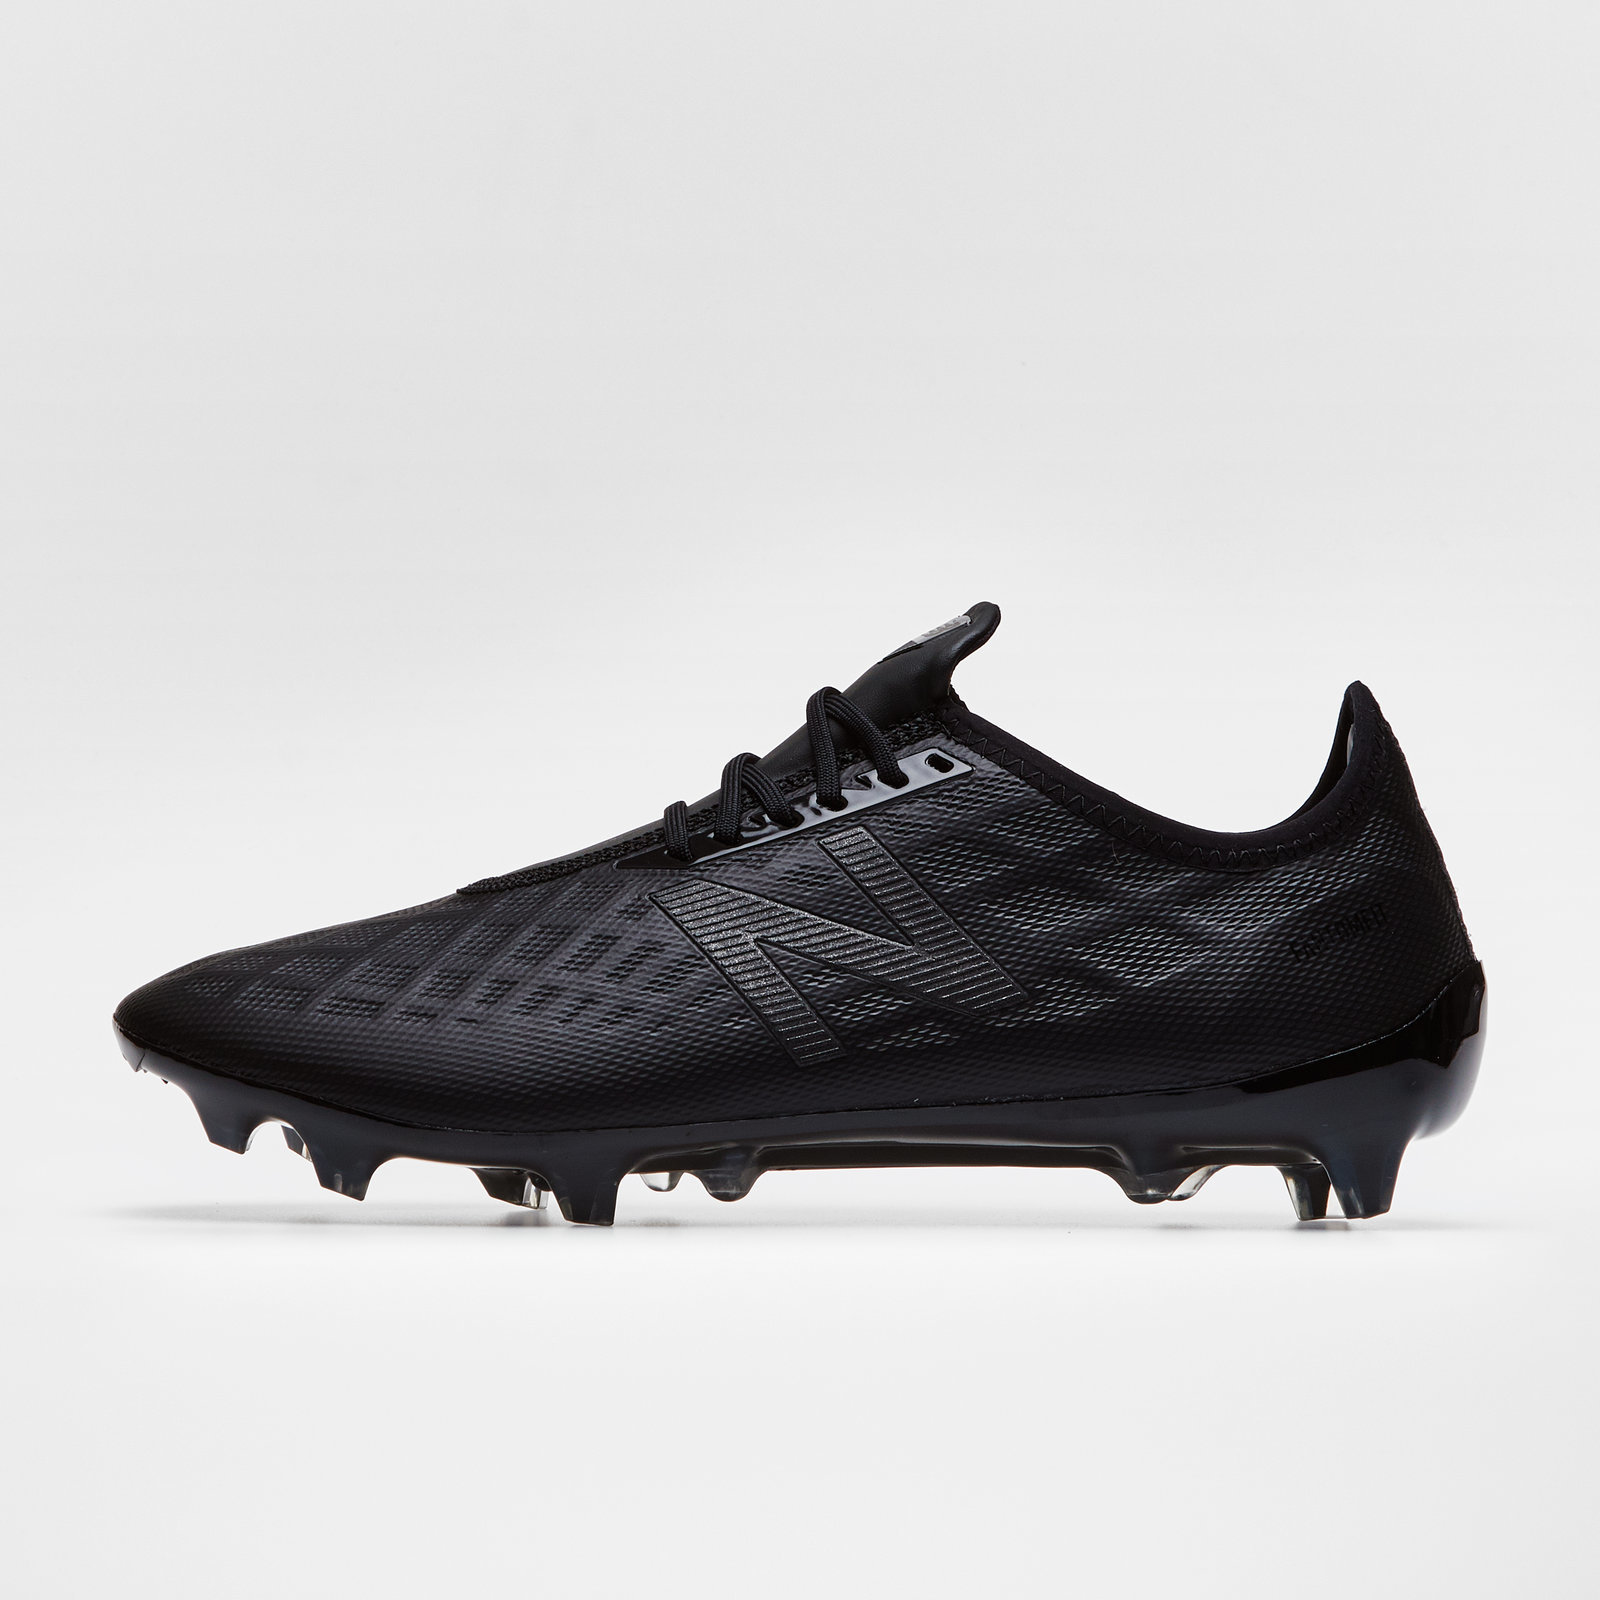 AJF,new balance furon black football boots,nalan.com.sg